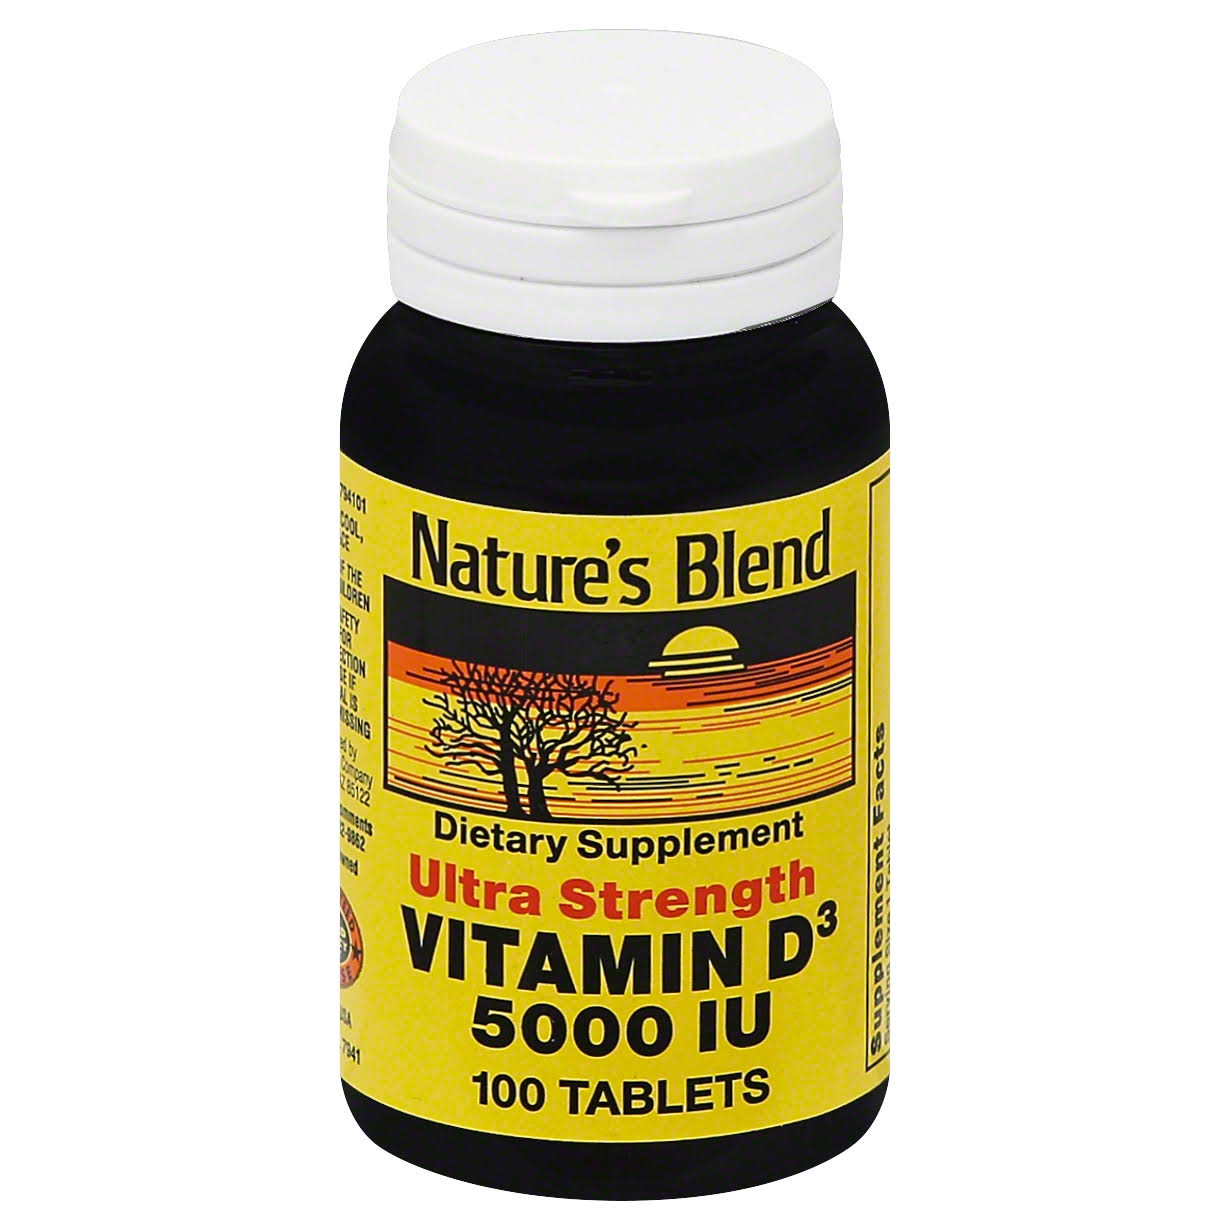 Nature's Blend Vitamin D3 Supplement - 5000IU, 100 Tablets